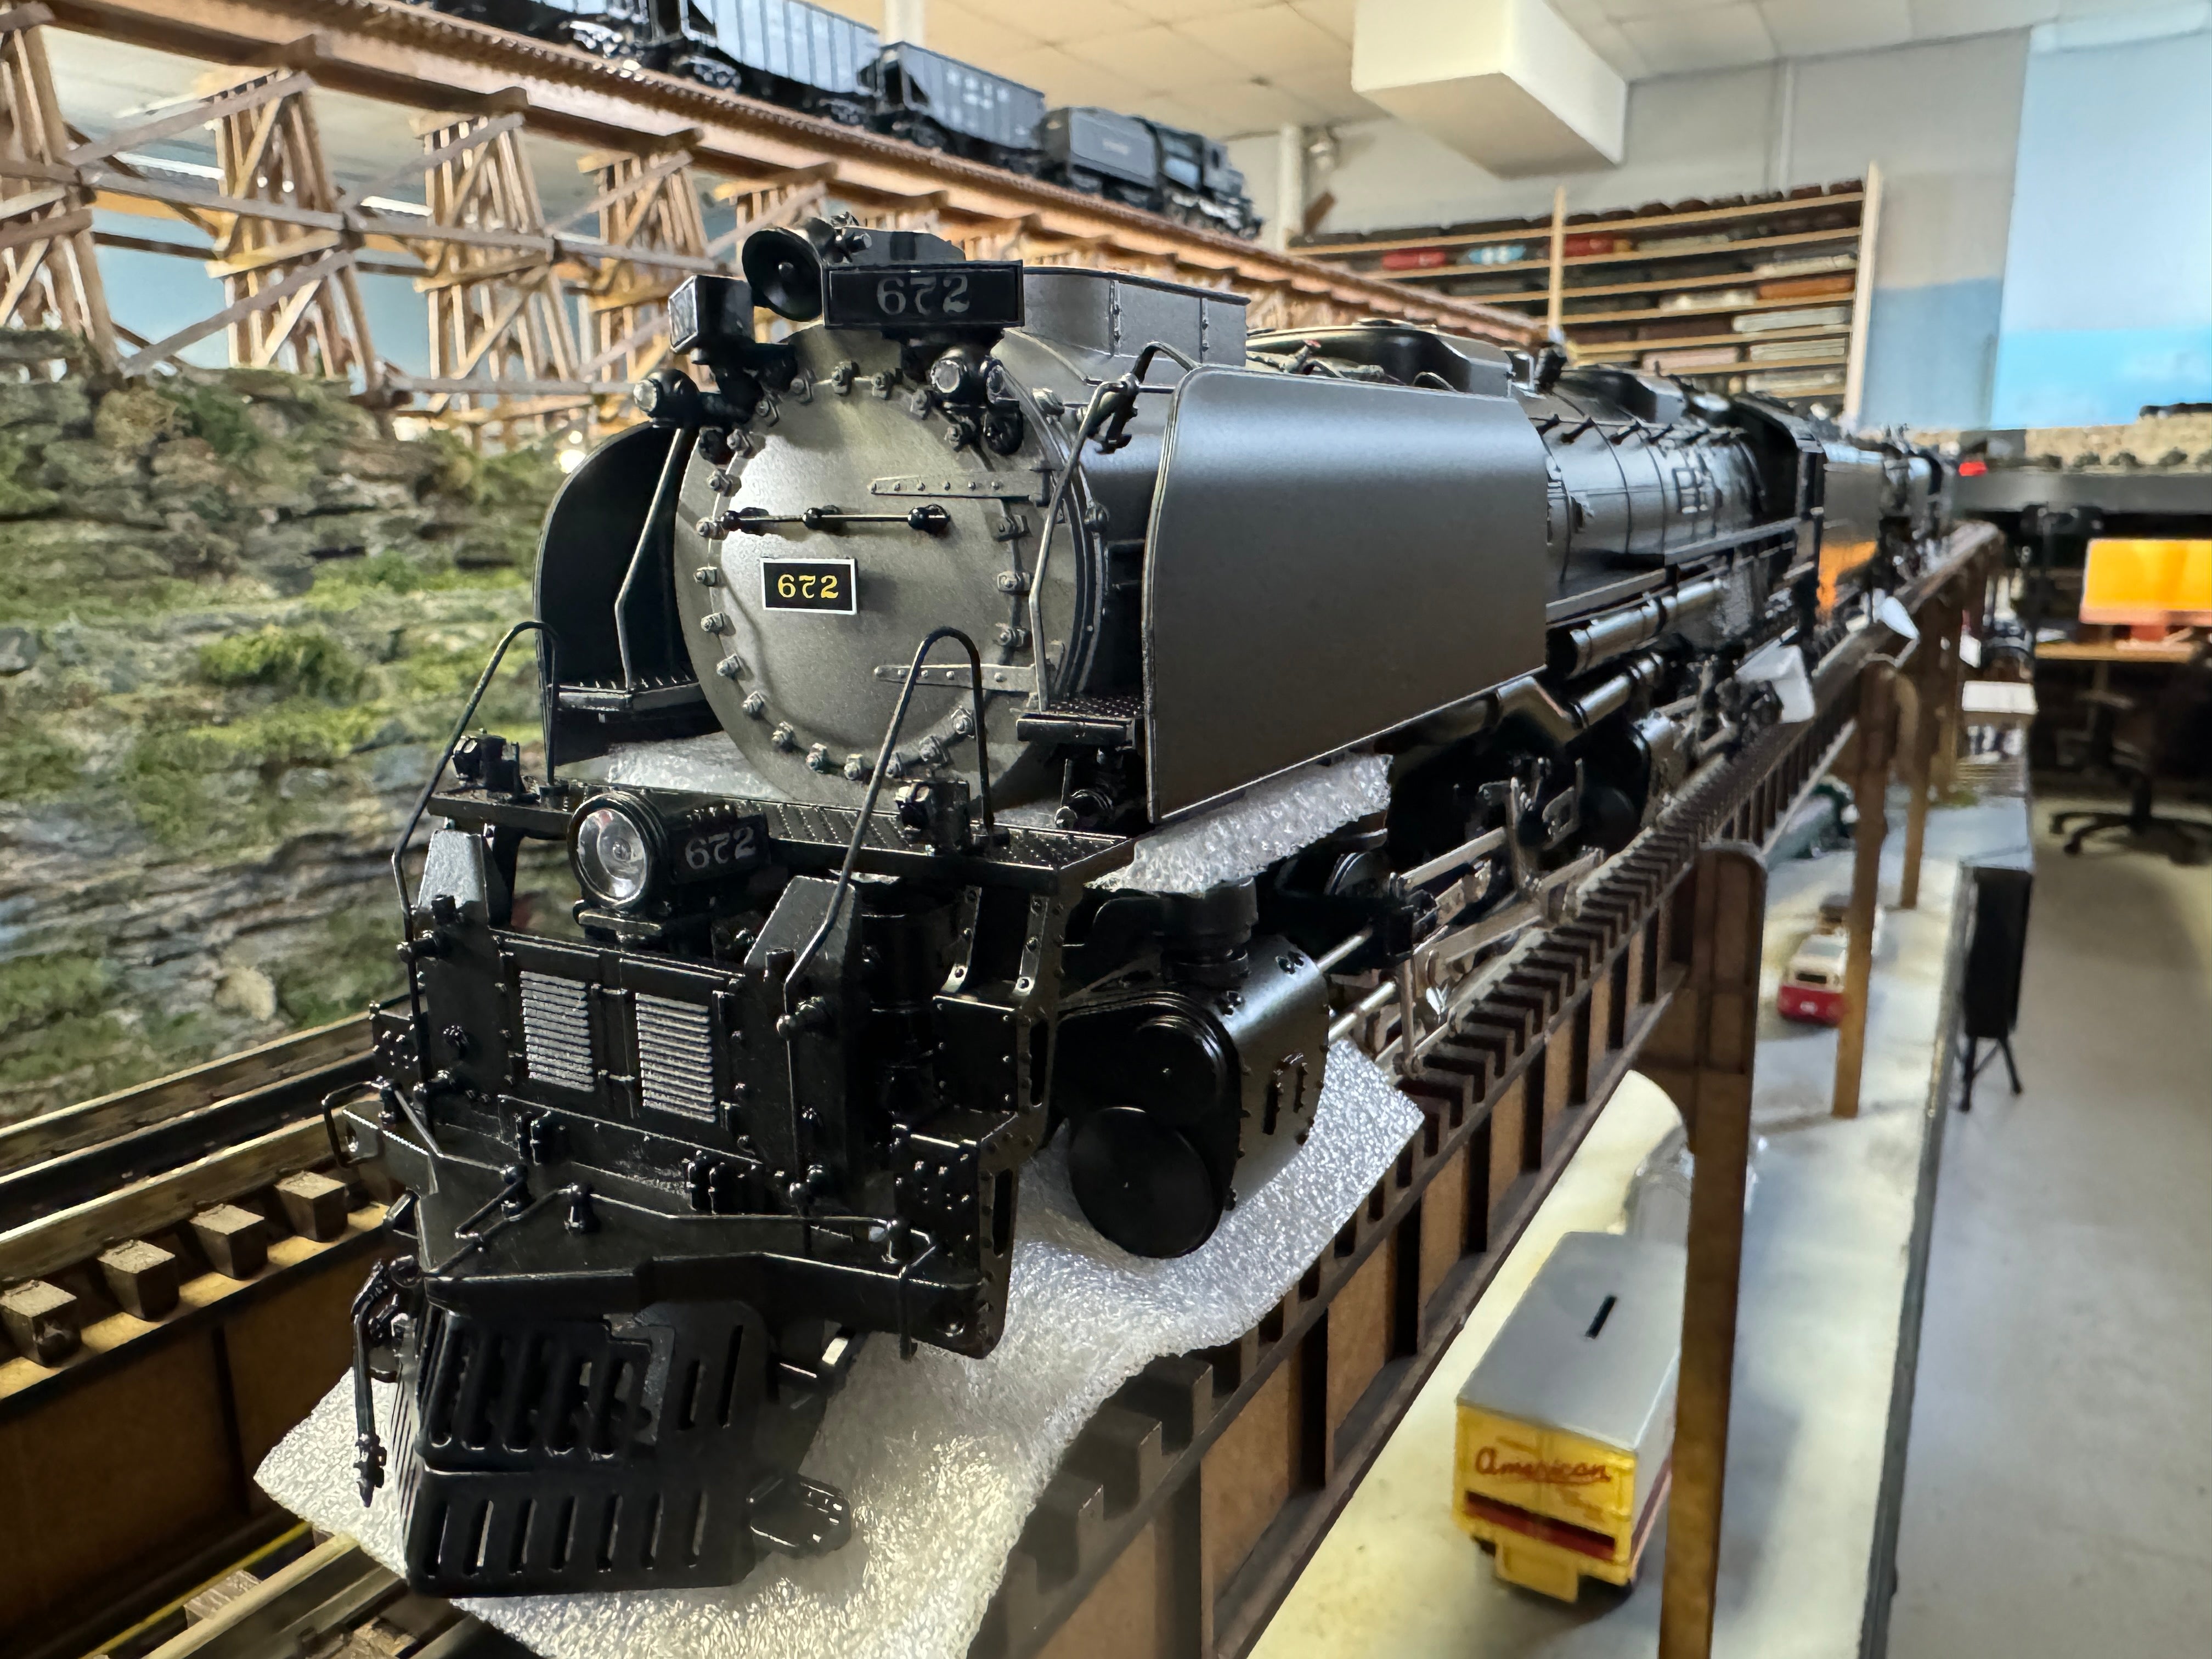 MTH 20-3890-1 - 4-6-6-4 Challenger Steam Engine "Clinchfield" #672 w/ PS3 (Coal Tender)